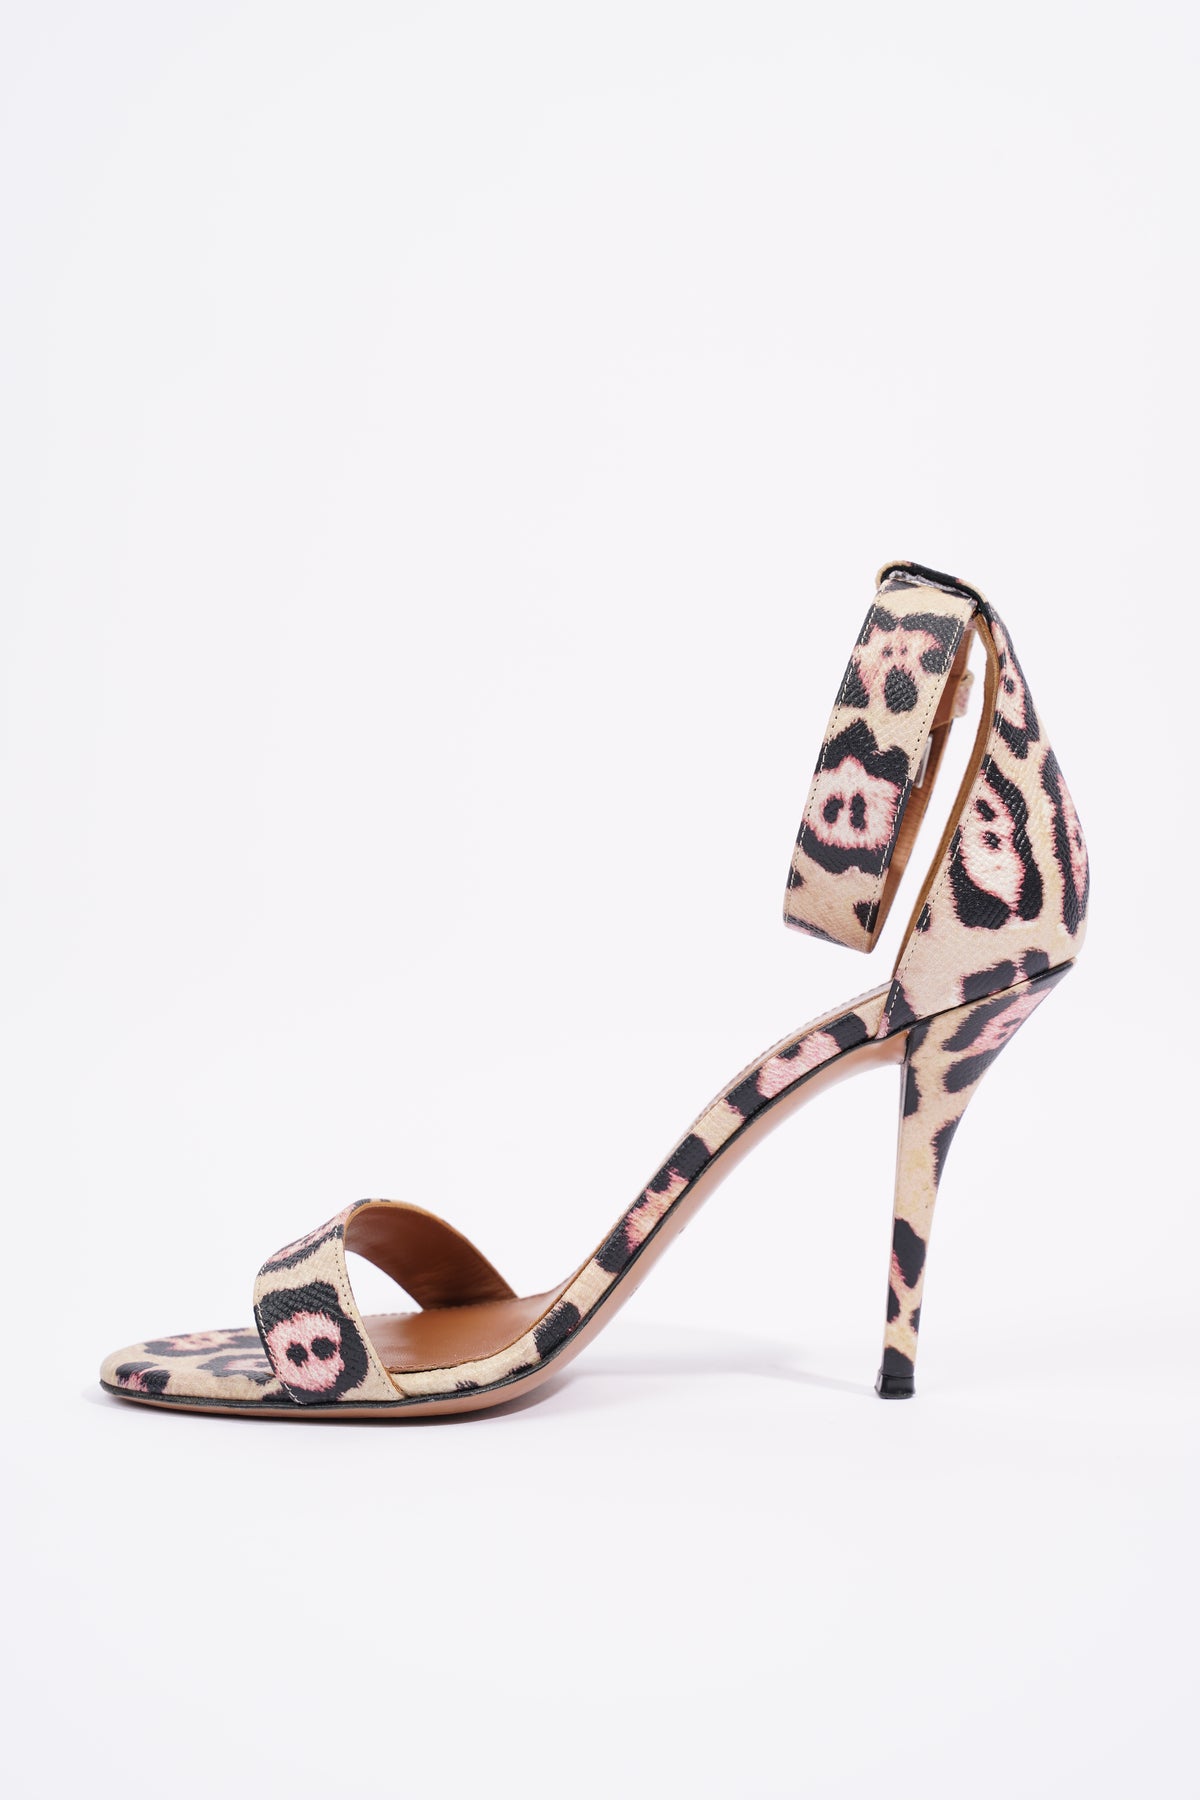 Fashion [Quality] Ladies Platform High Heel Cool FashionLow Heel Sandals  Open Toe-Leopard Print | Jumia Nigeria